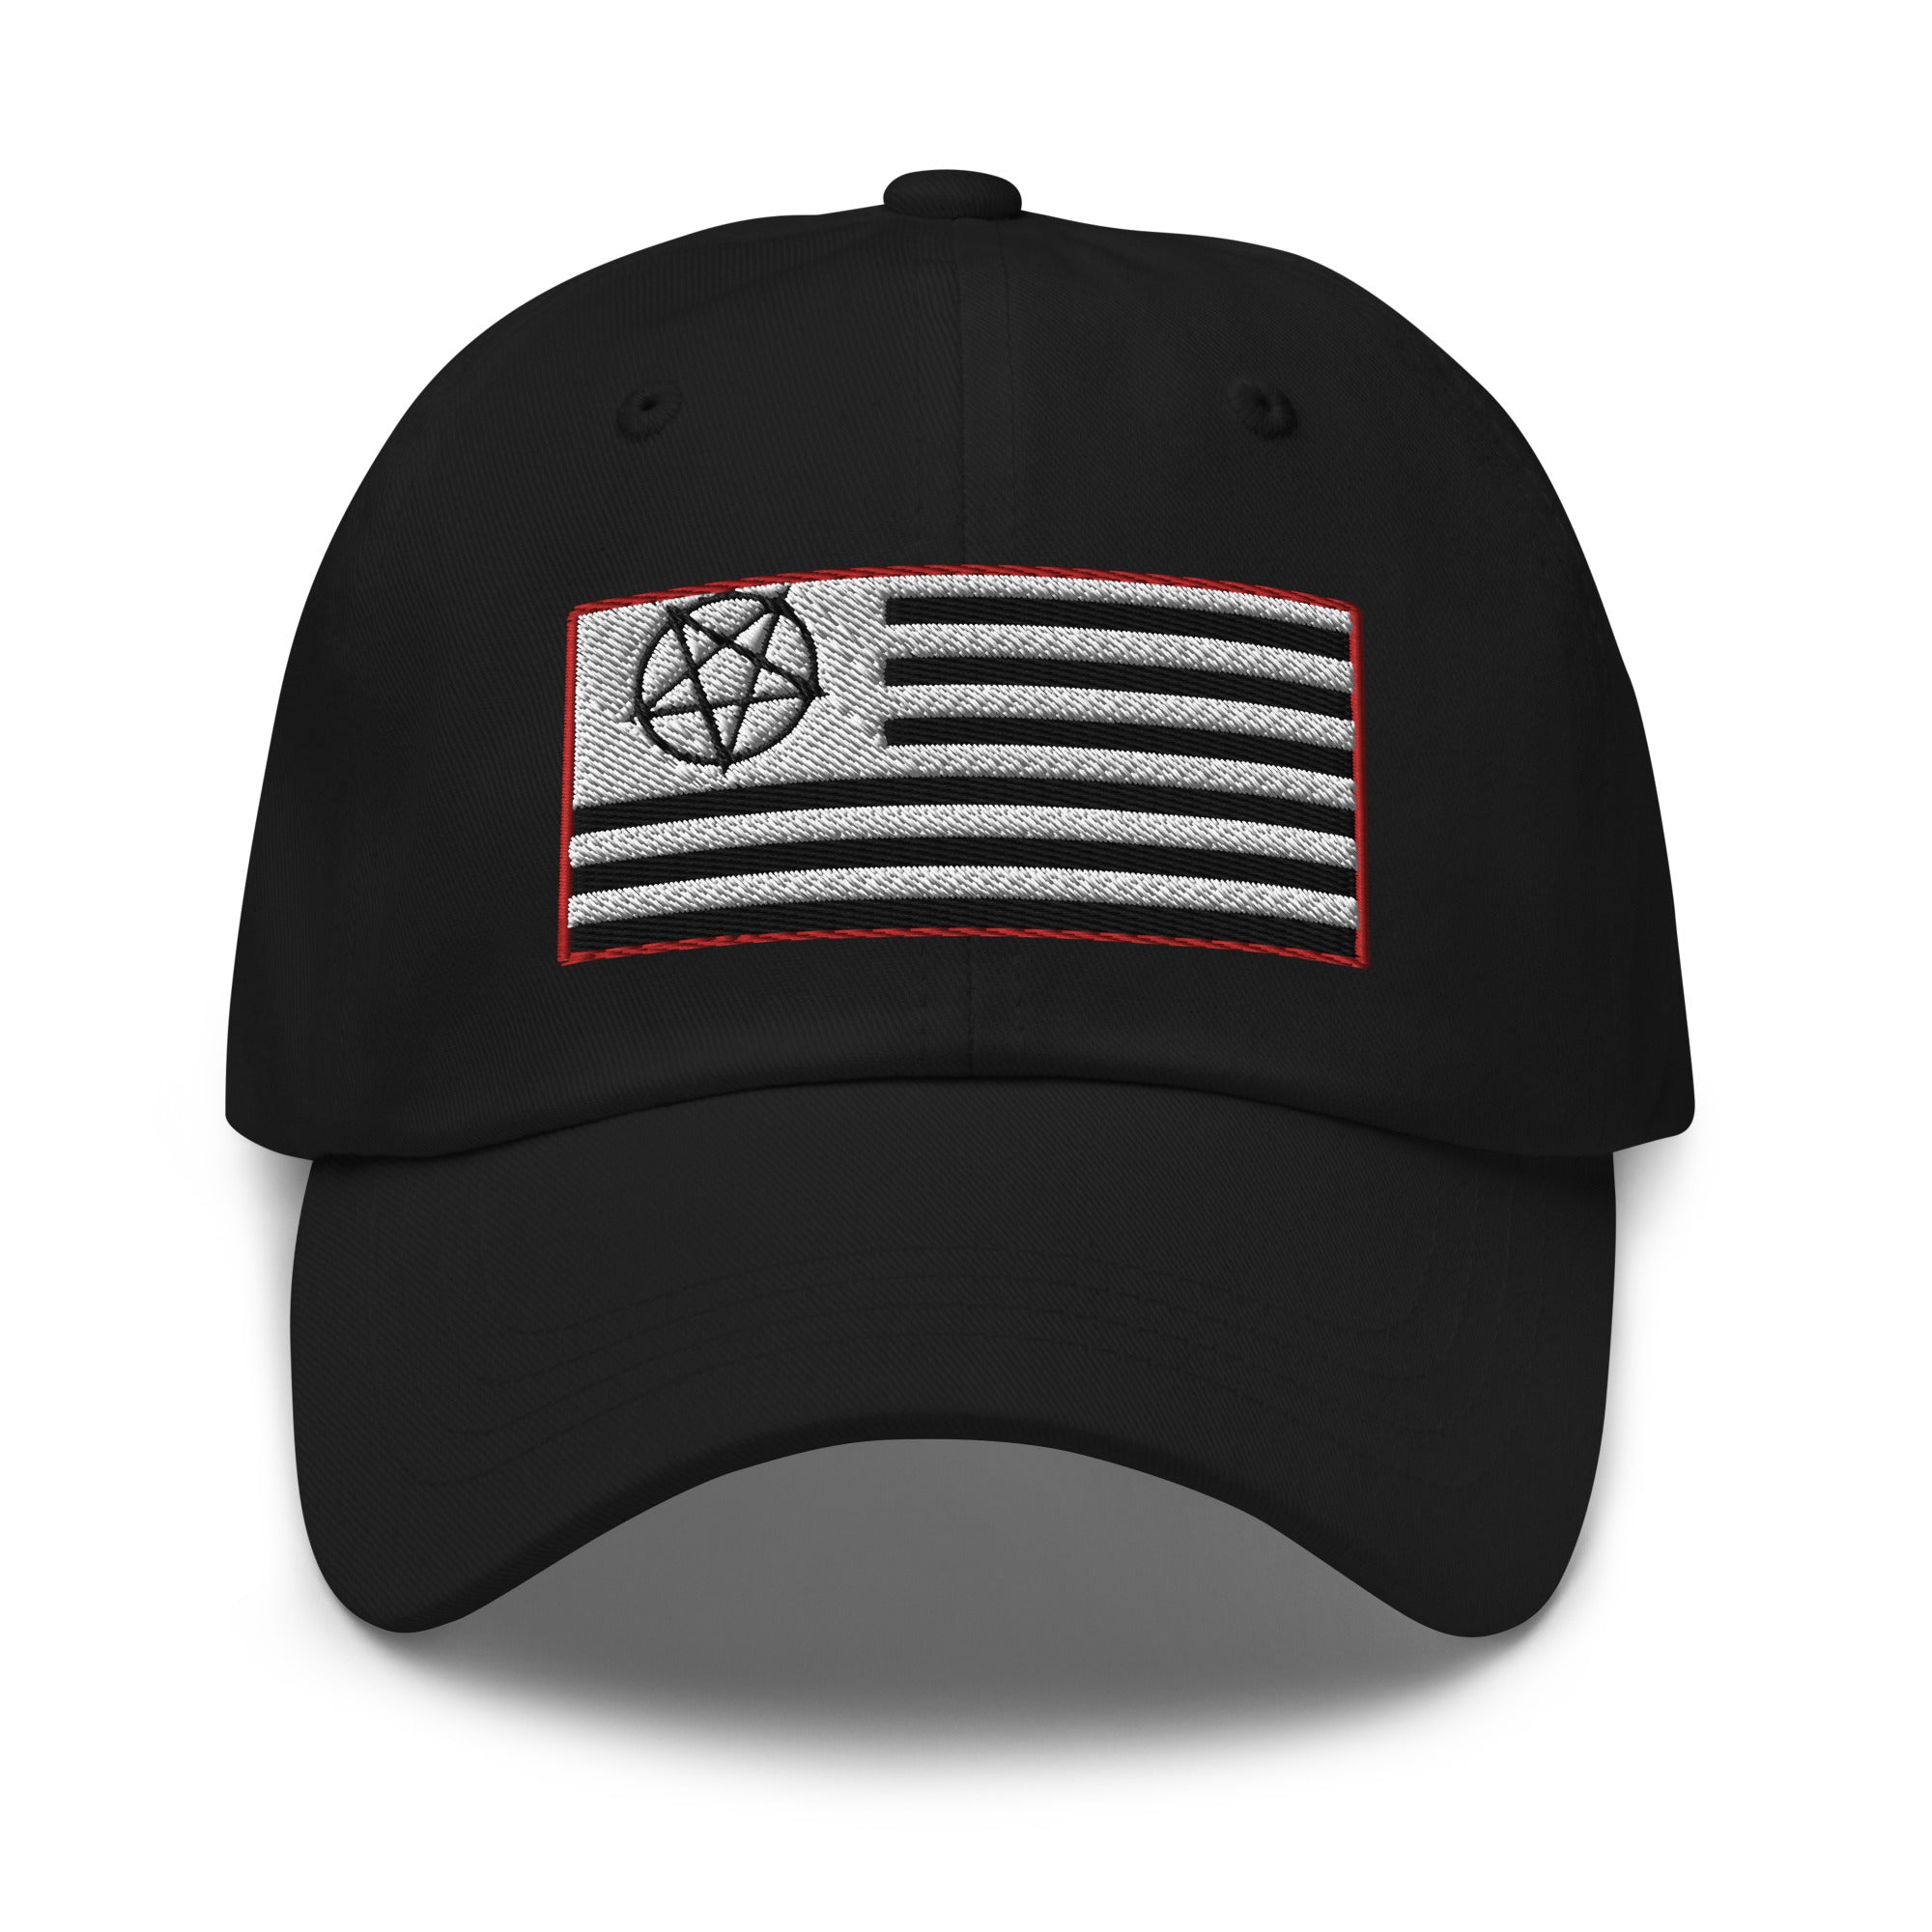 American Satanist Pentagram U.S. Flag Embroidered Baseball Cap Dad hat - Edge of Life Designs